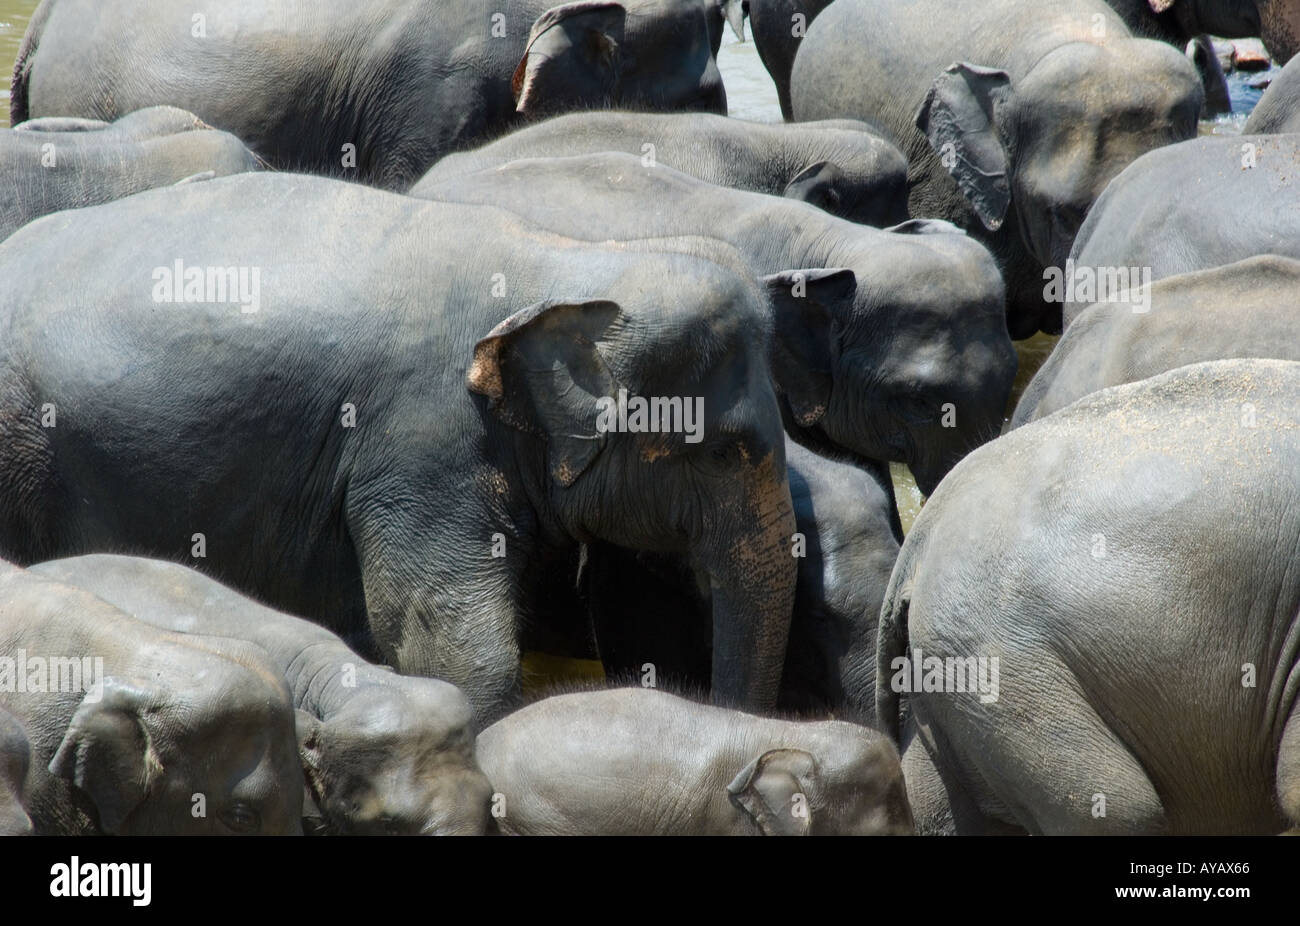 Herd of elephants in the river at Pinnawala Elephant Sanctuary, Sri Lanka. Stock Photo